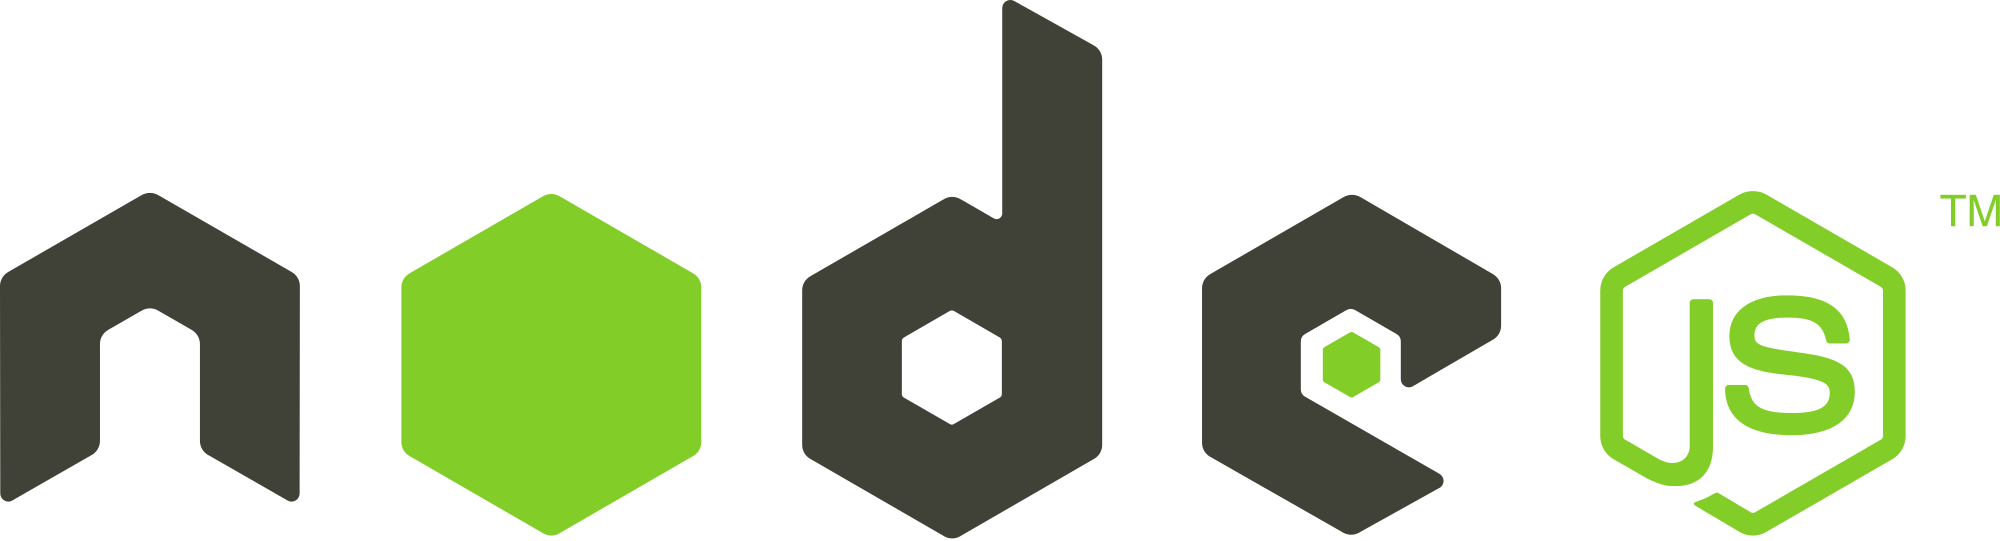 Node.js - ServerSide Javascript